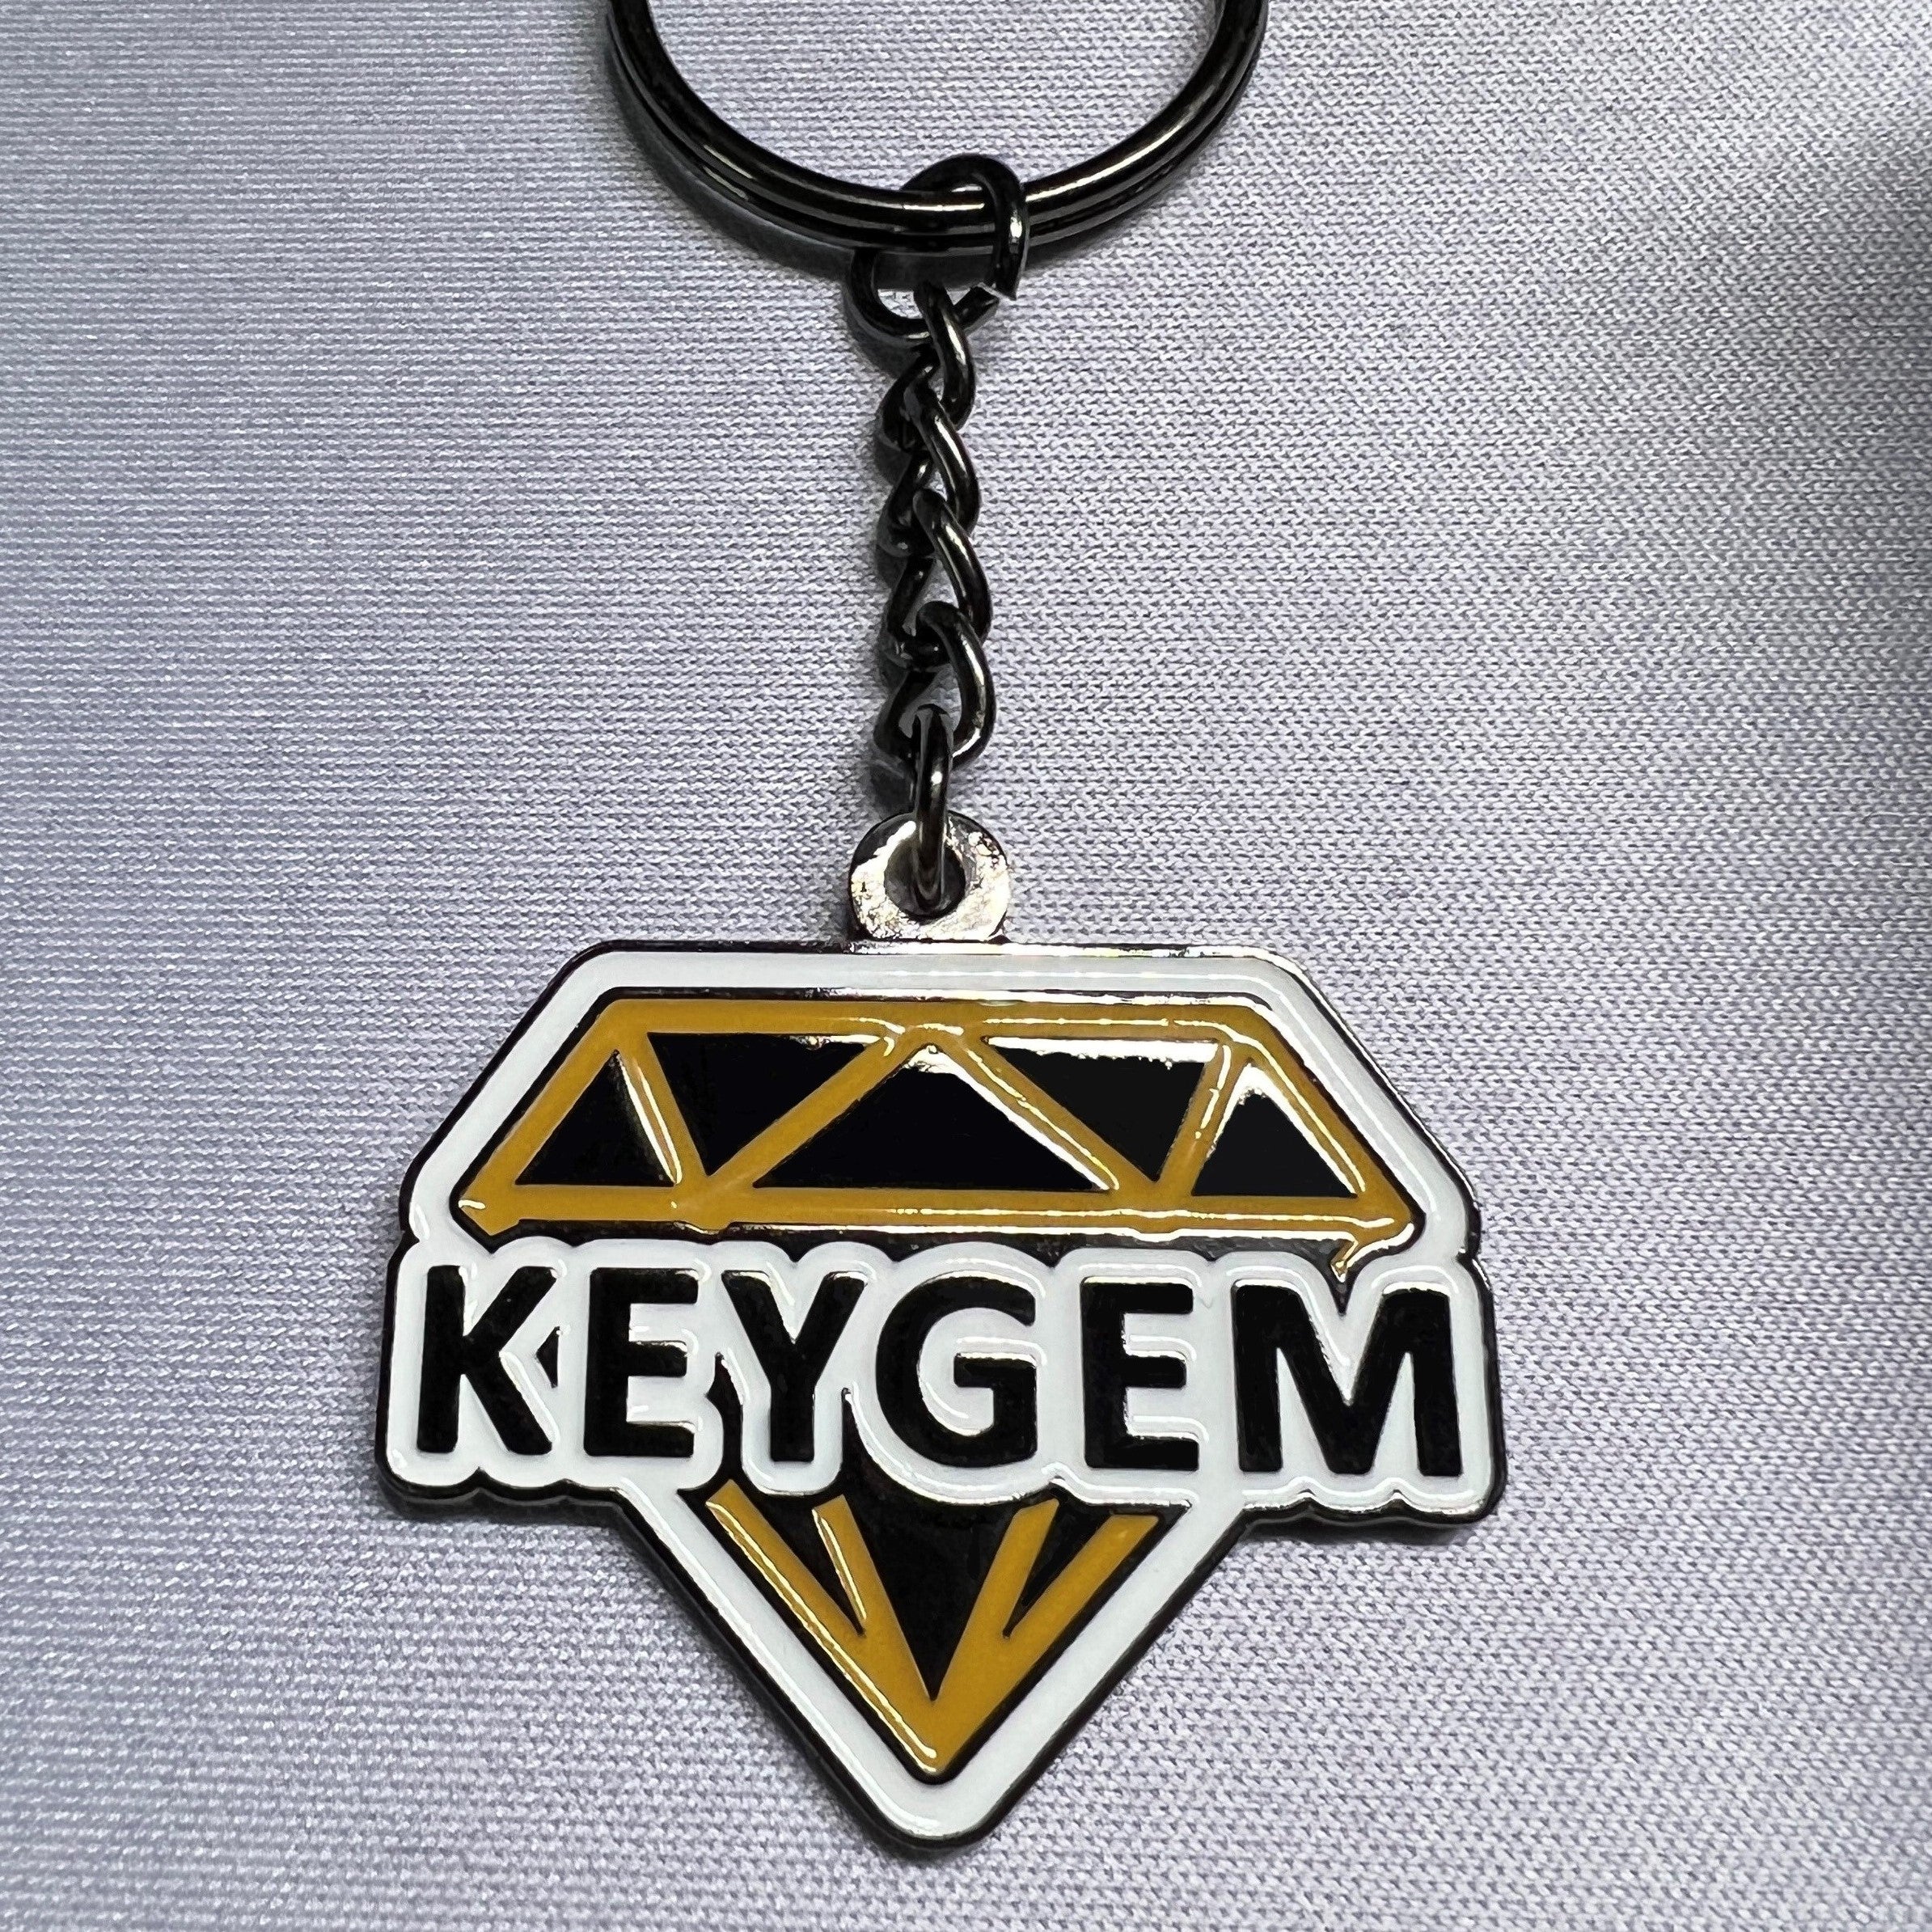 KEYGEM Keychain